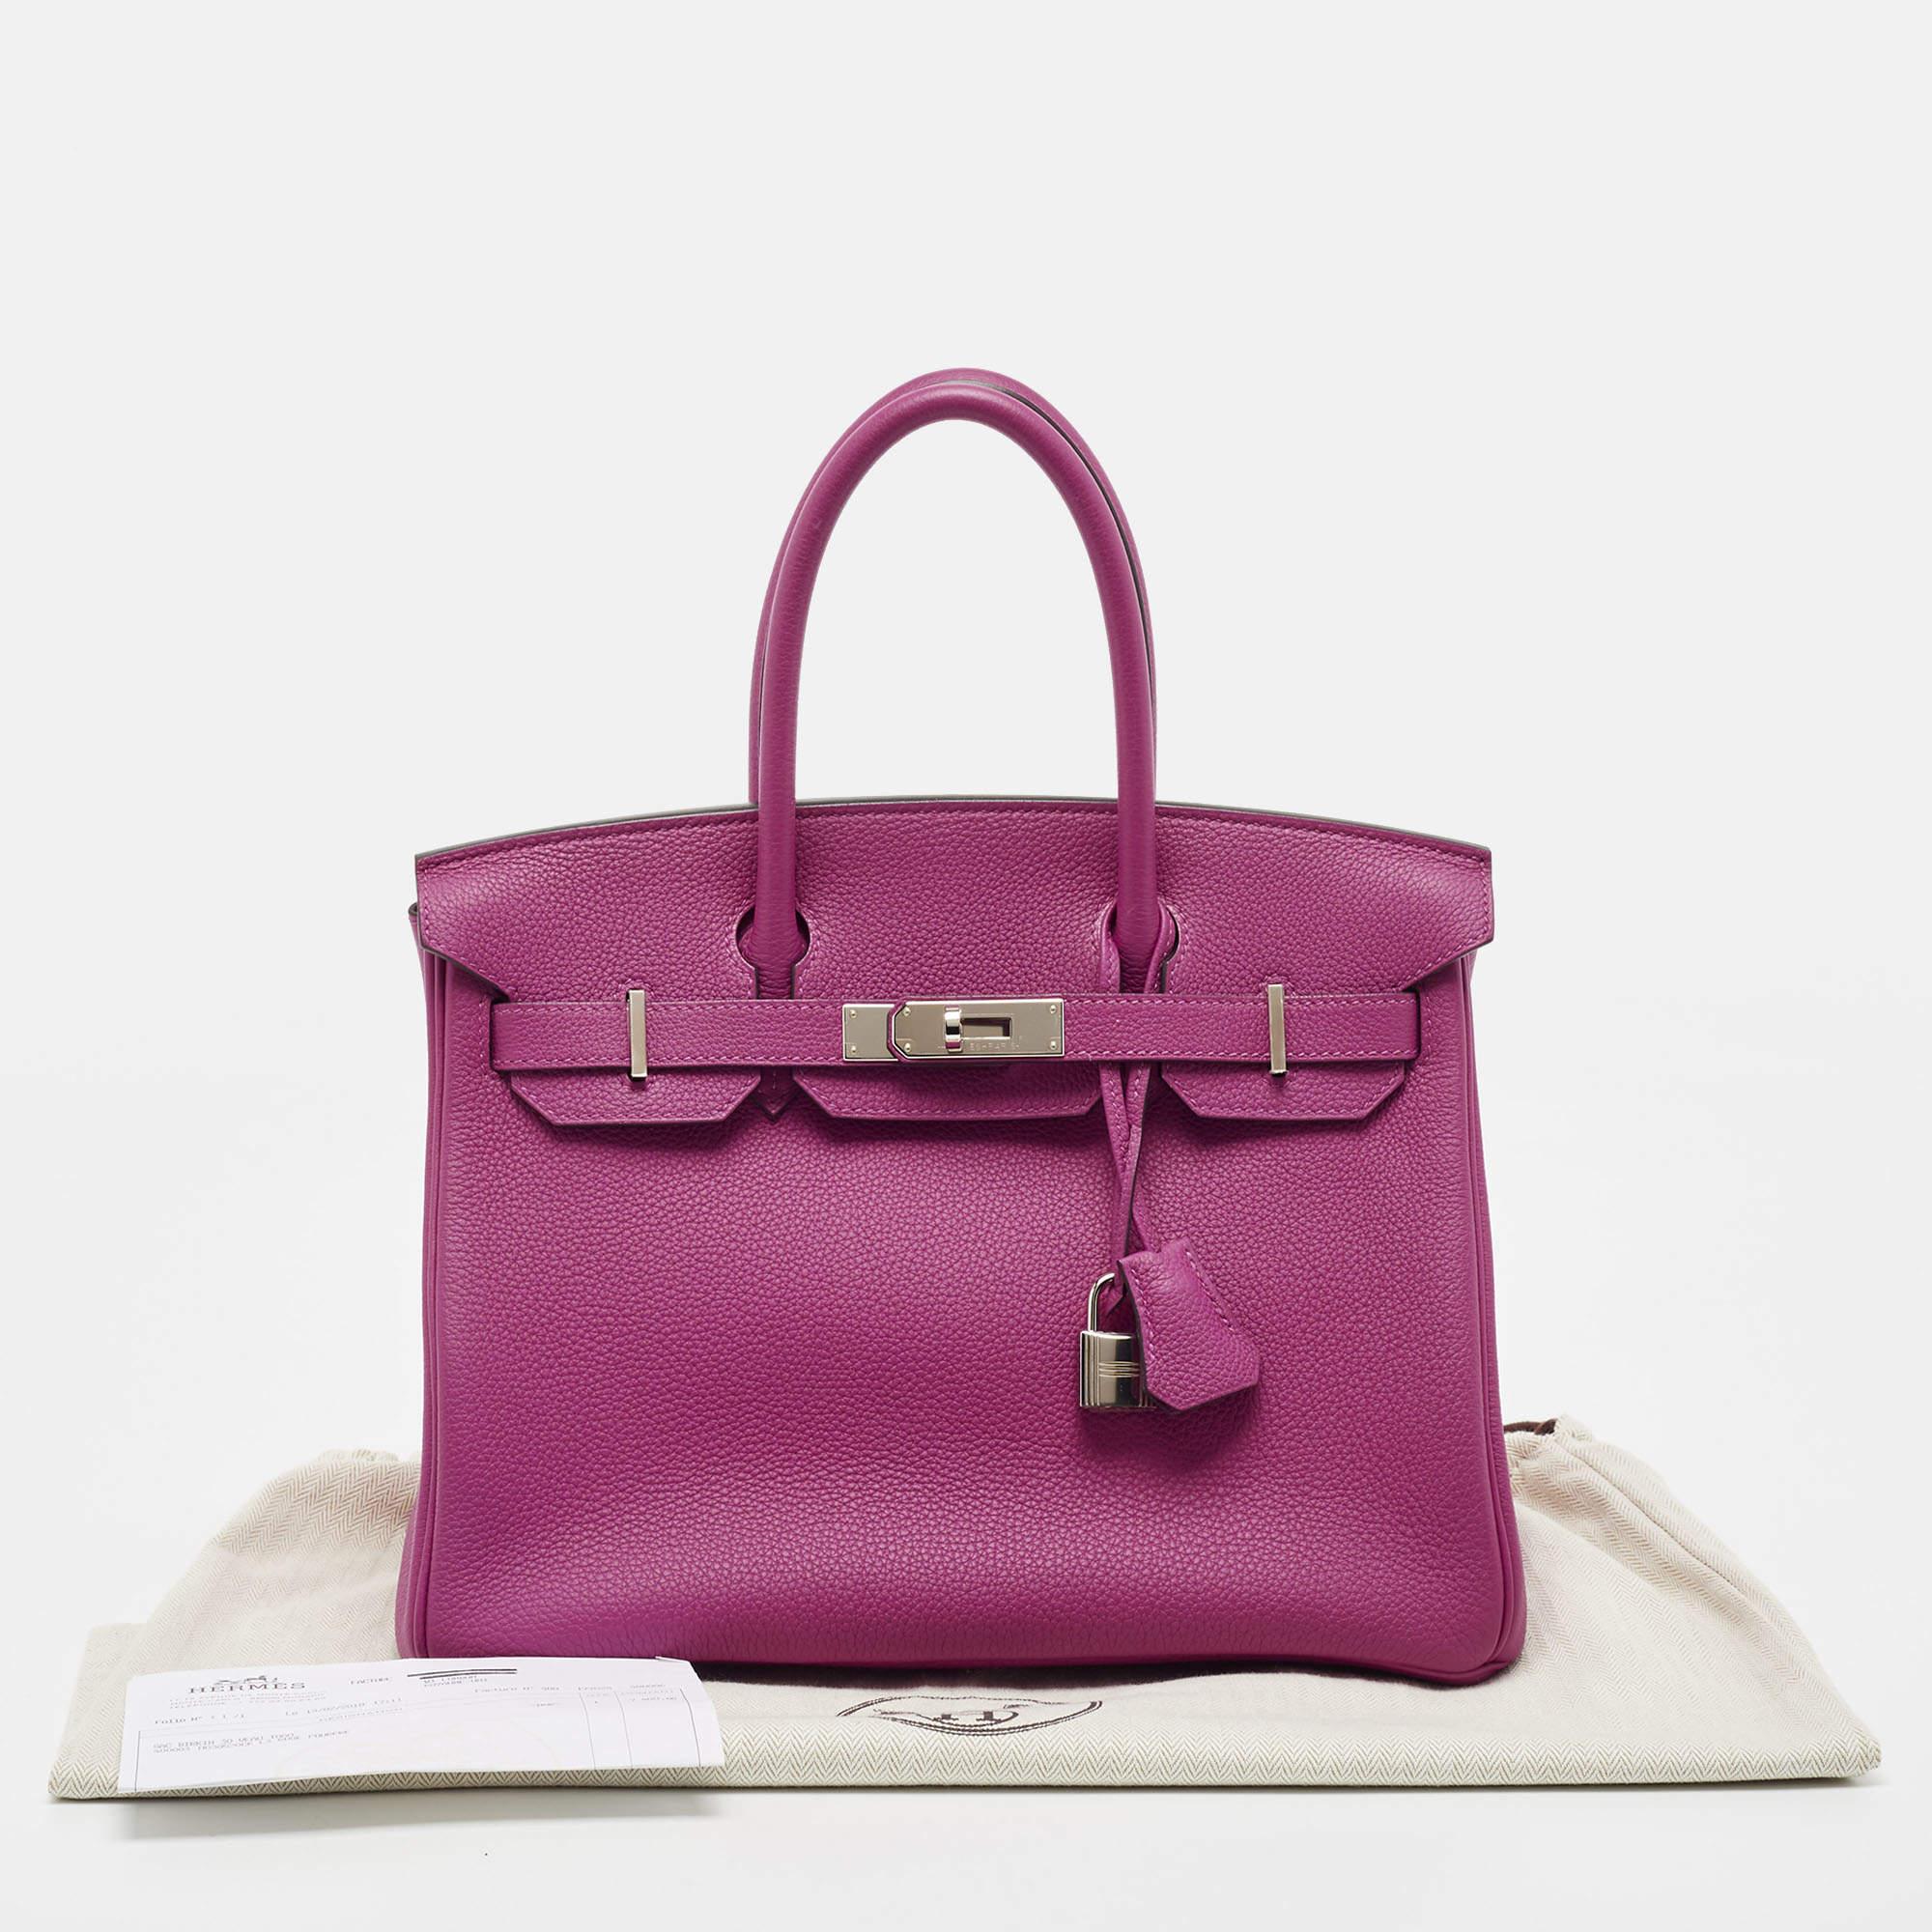 Hermès Rose Pourpre Togo Leather Palladium Finish Birkin 30 Bag 12